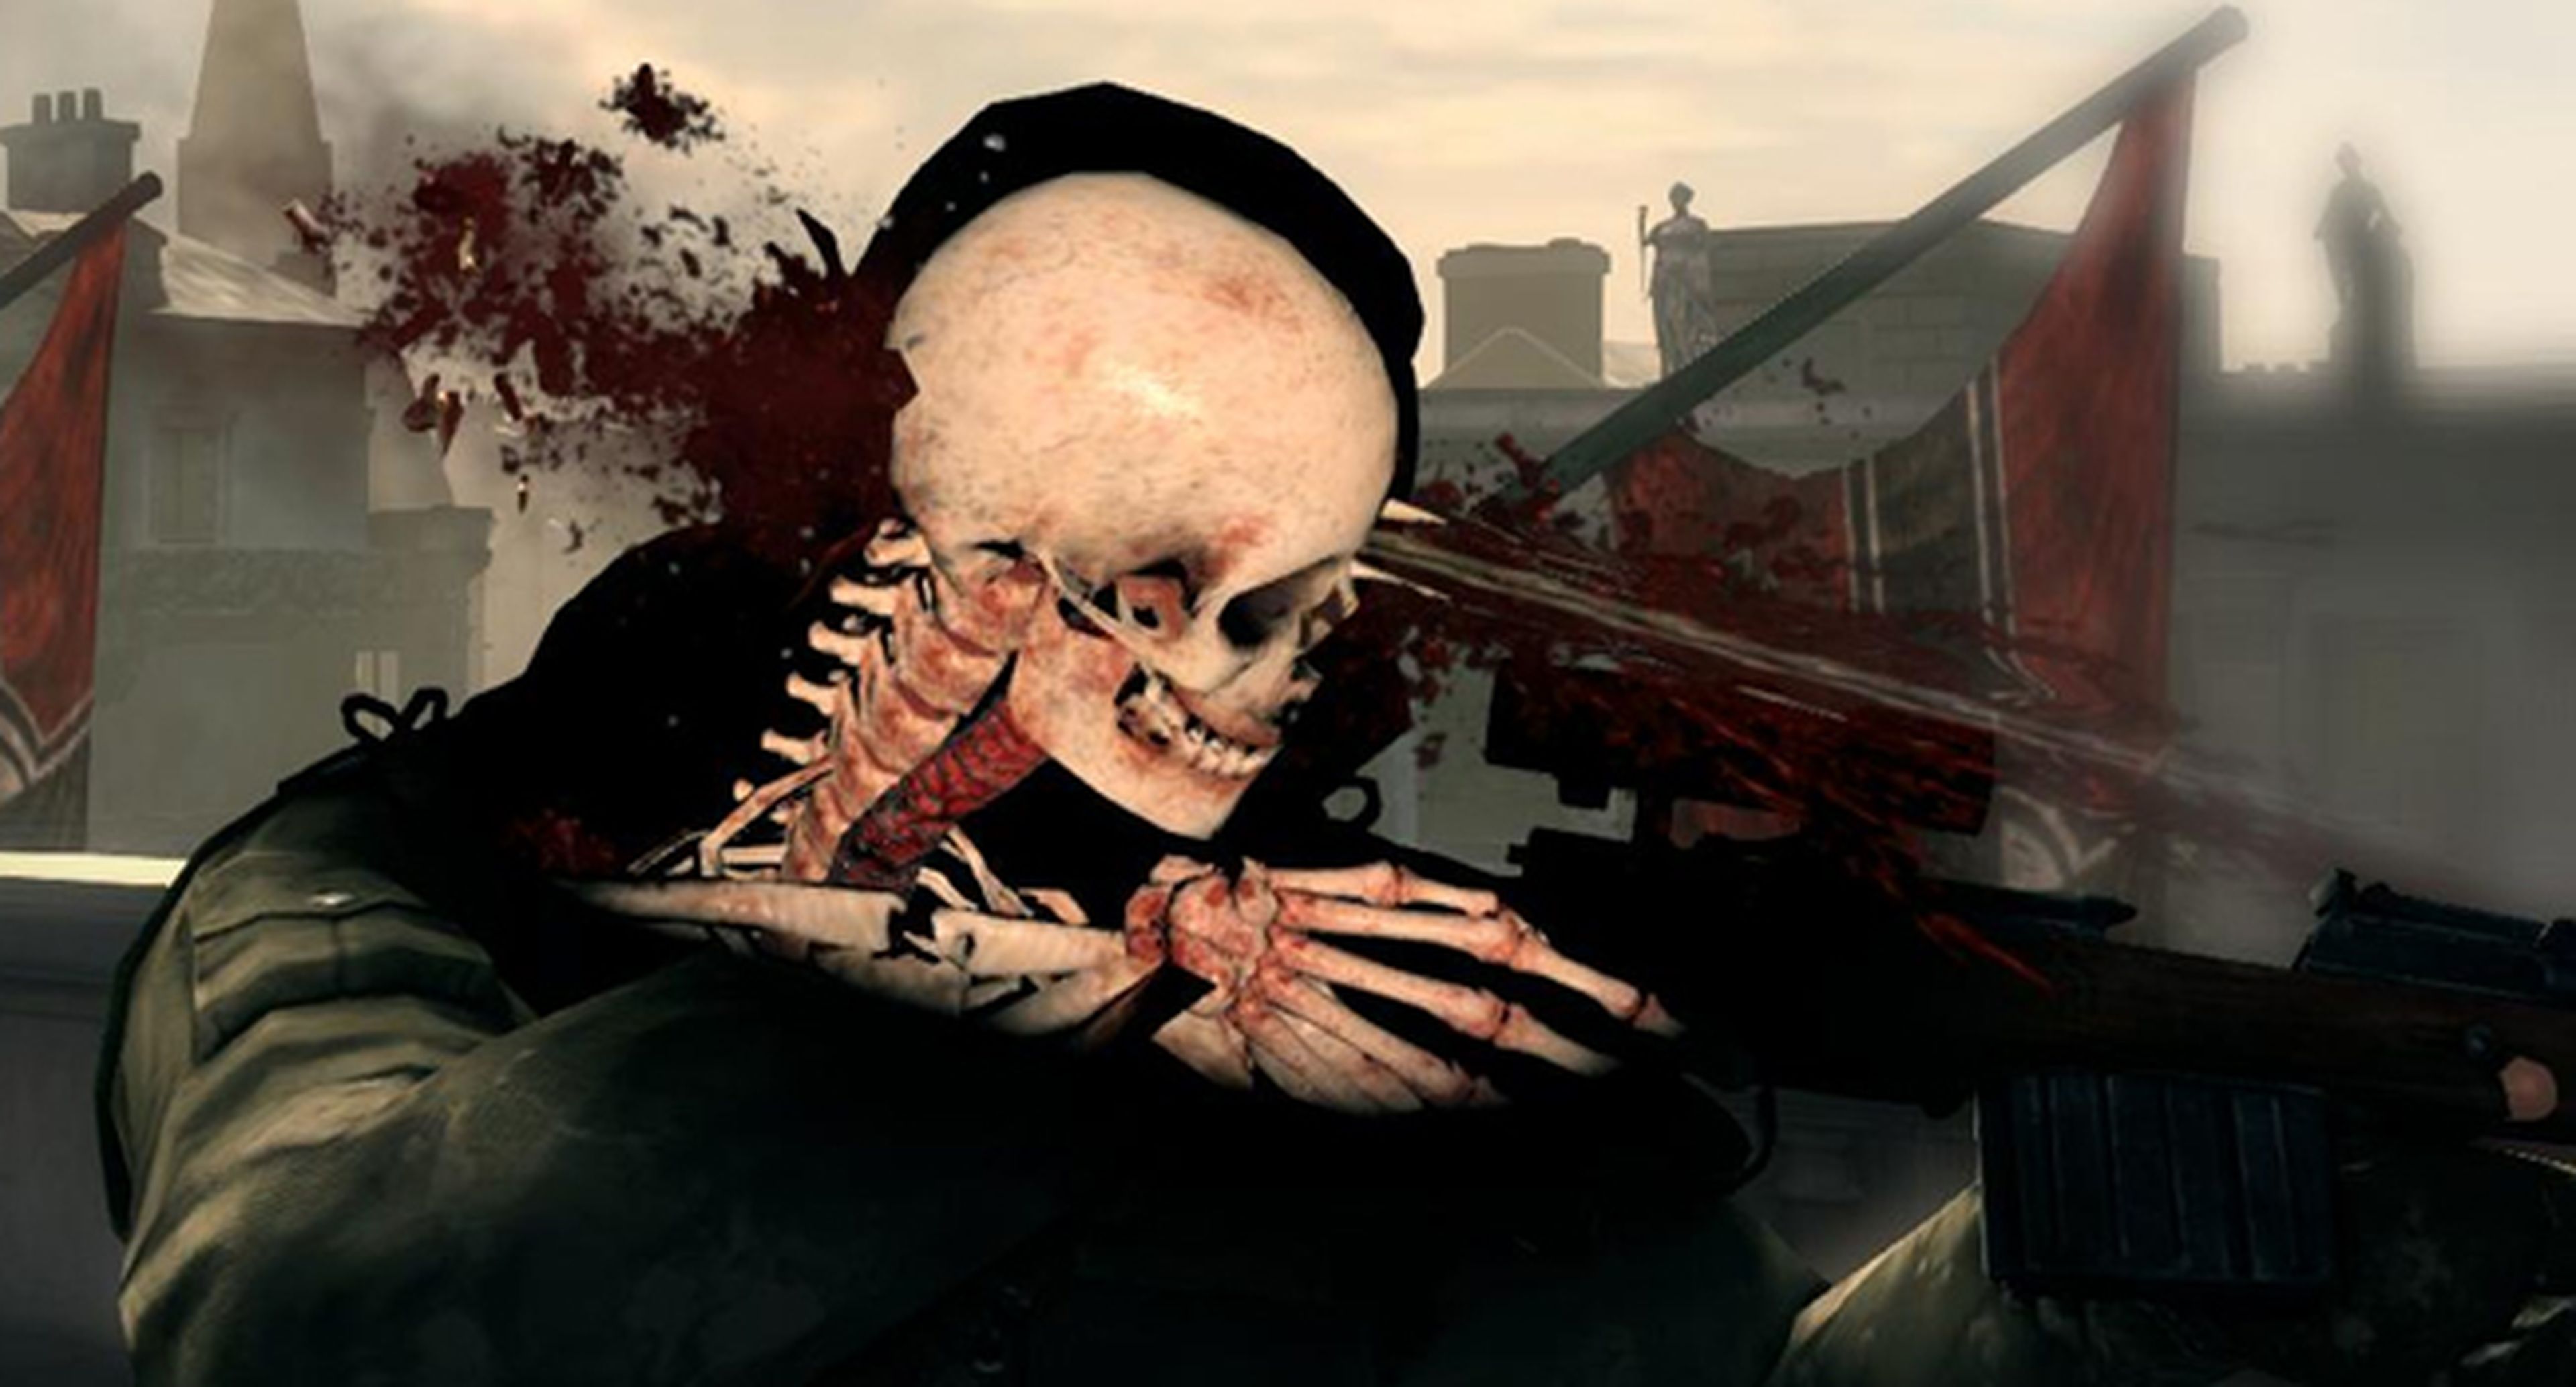 Sniper Elite V2 gratis en Steam momentáneamente